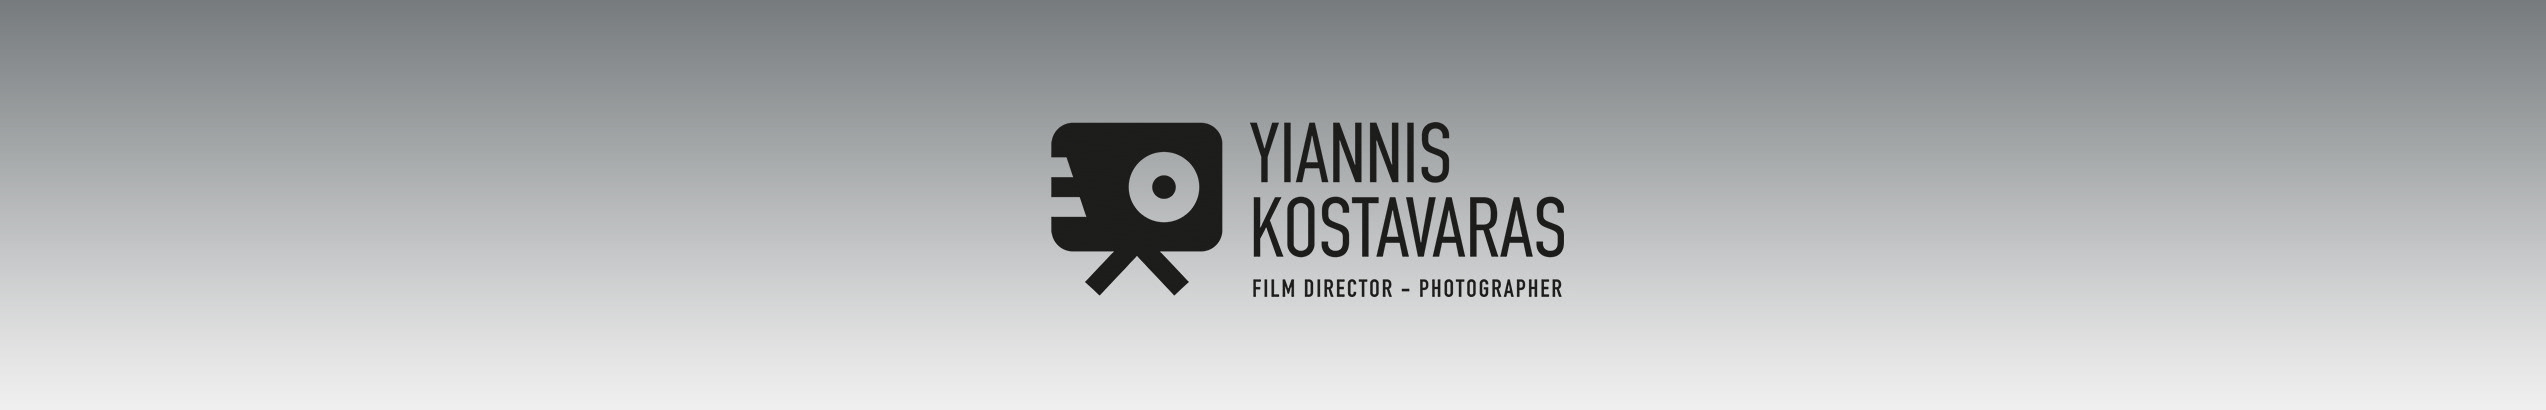 Yiannis Kostavaras's profile banner